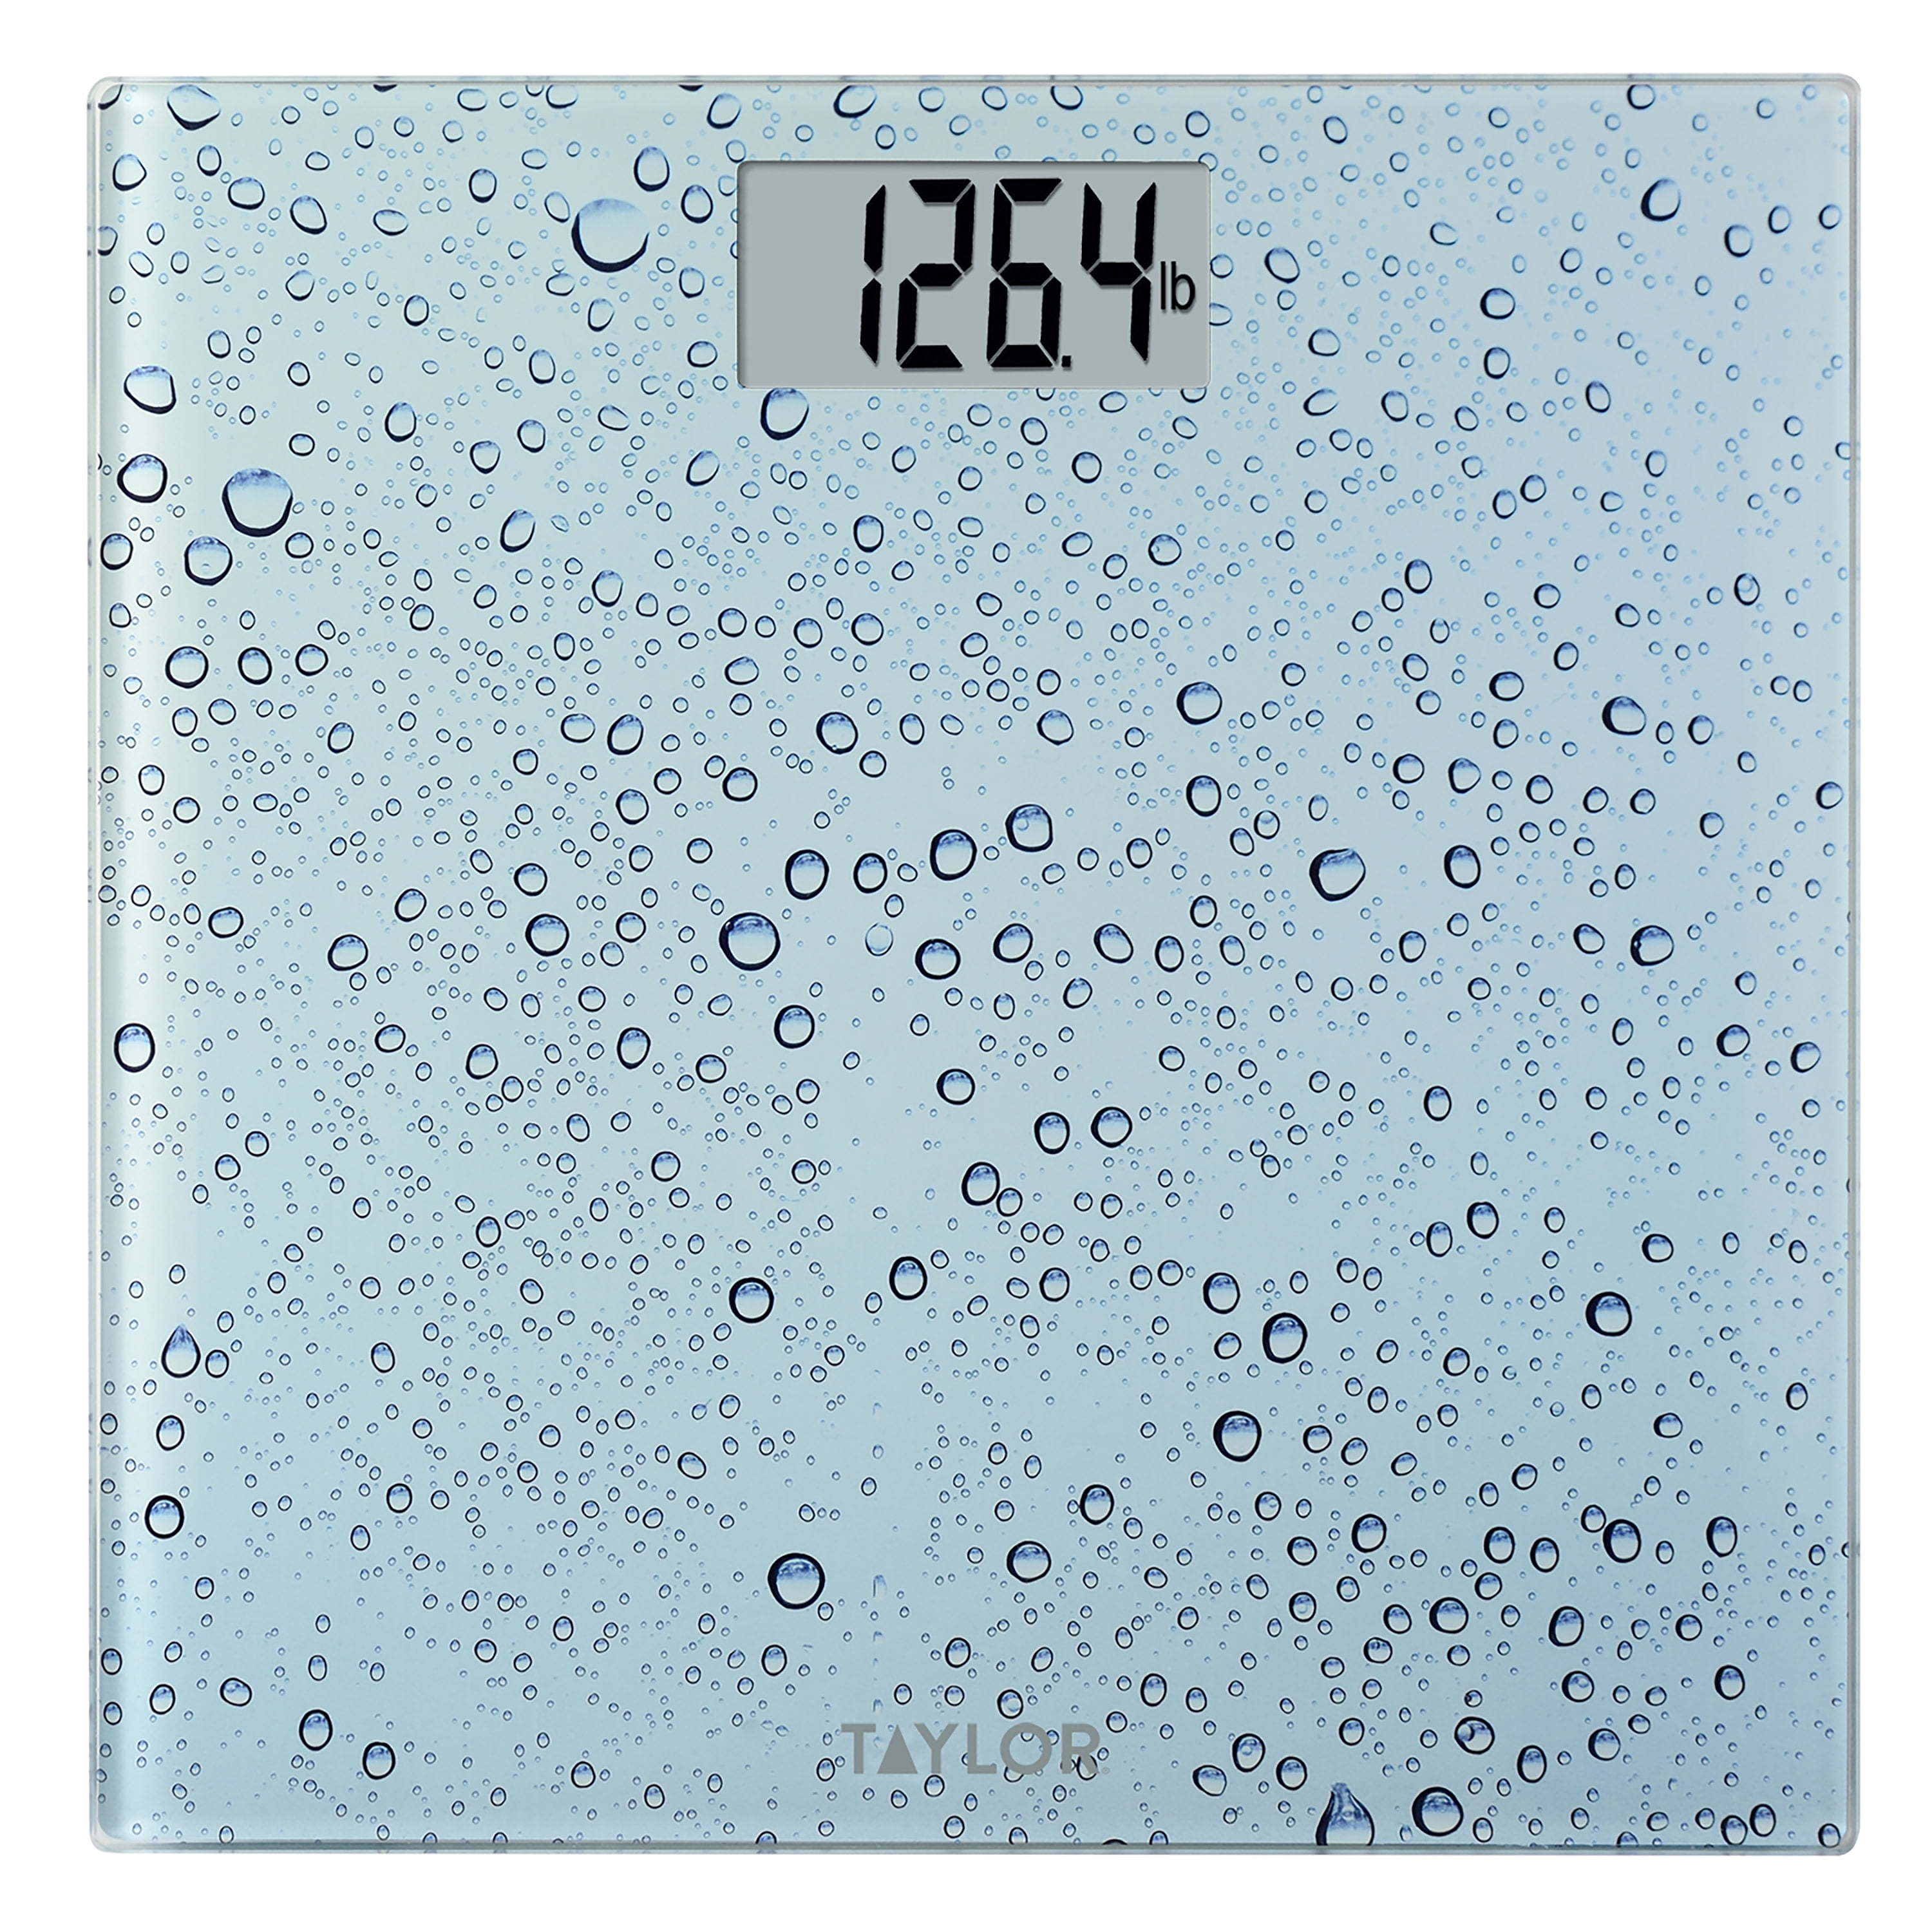 Taylor 350 lb Digital Bathroom Scale White/Gray - Ace Hardware